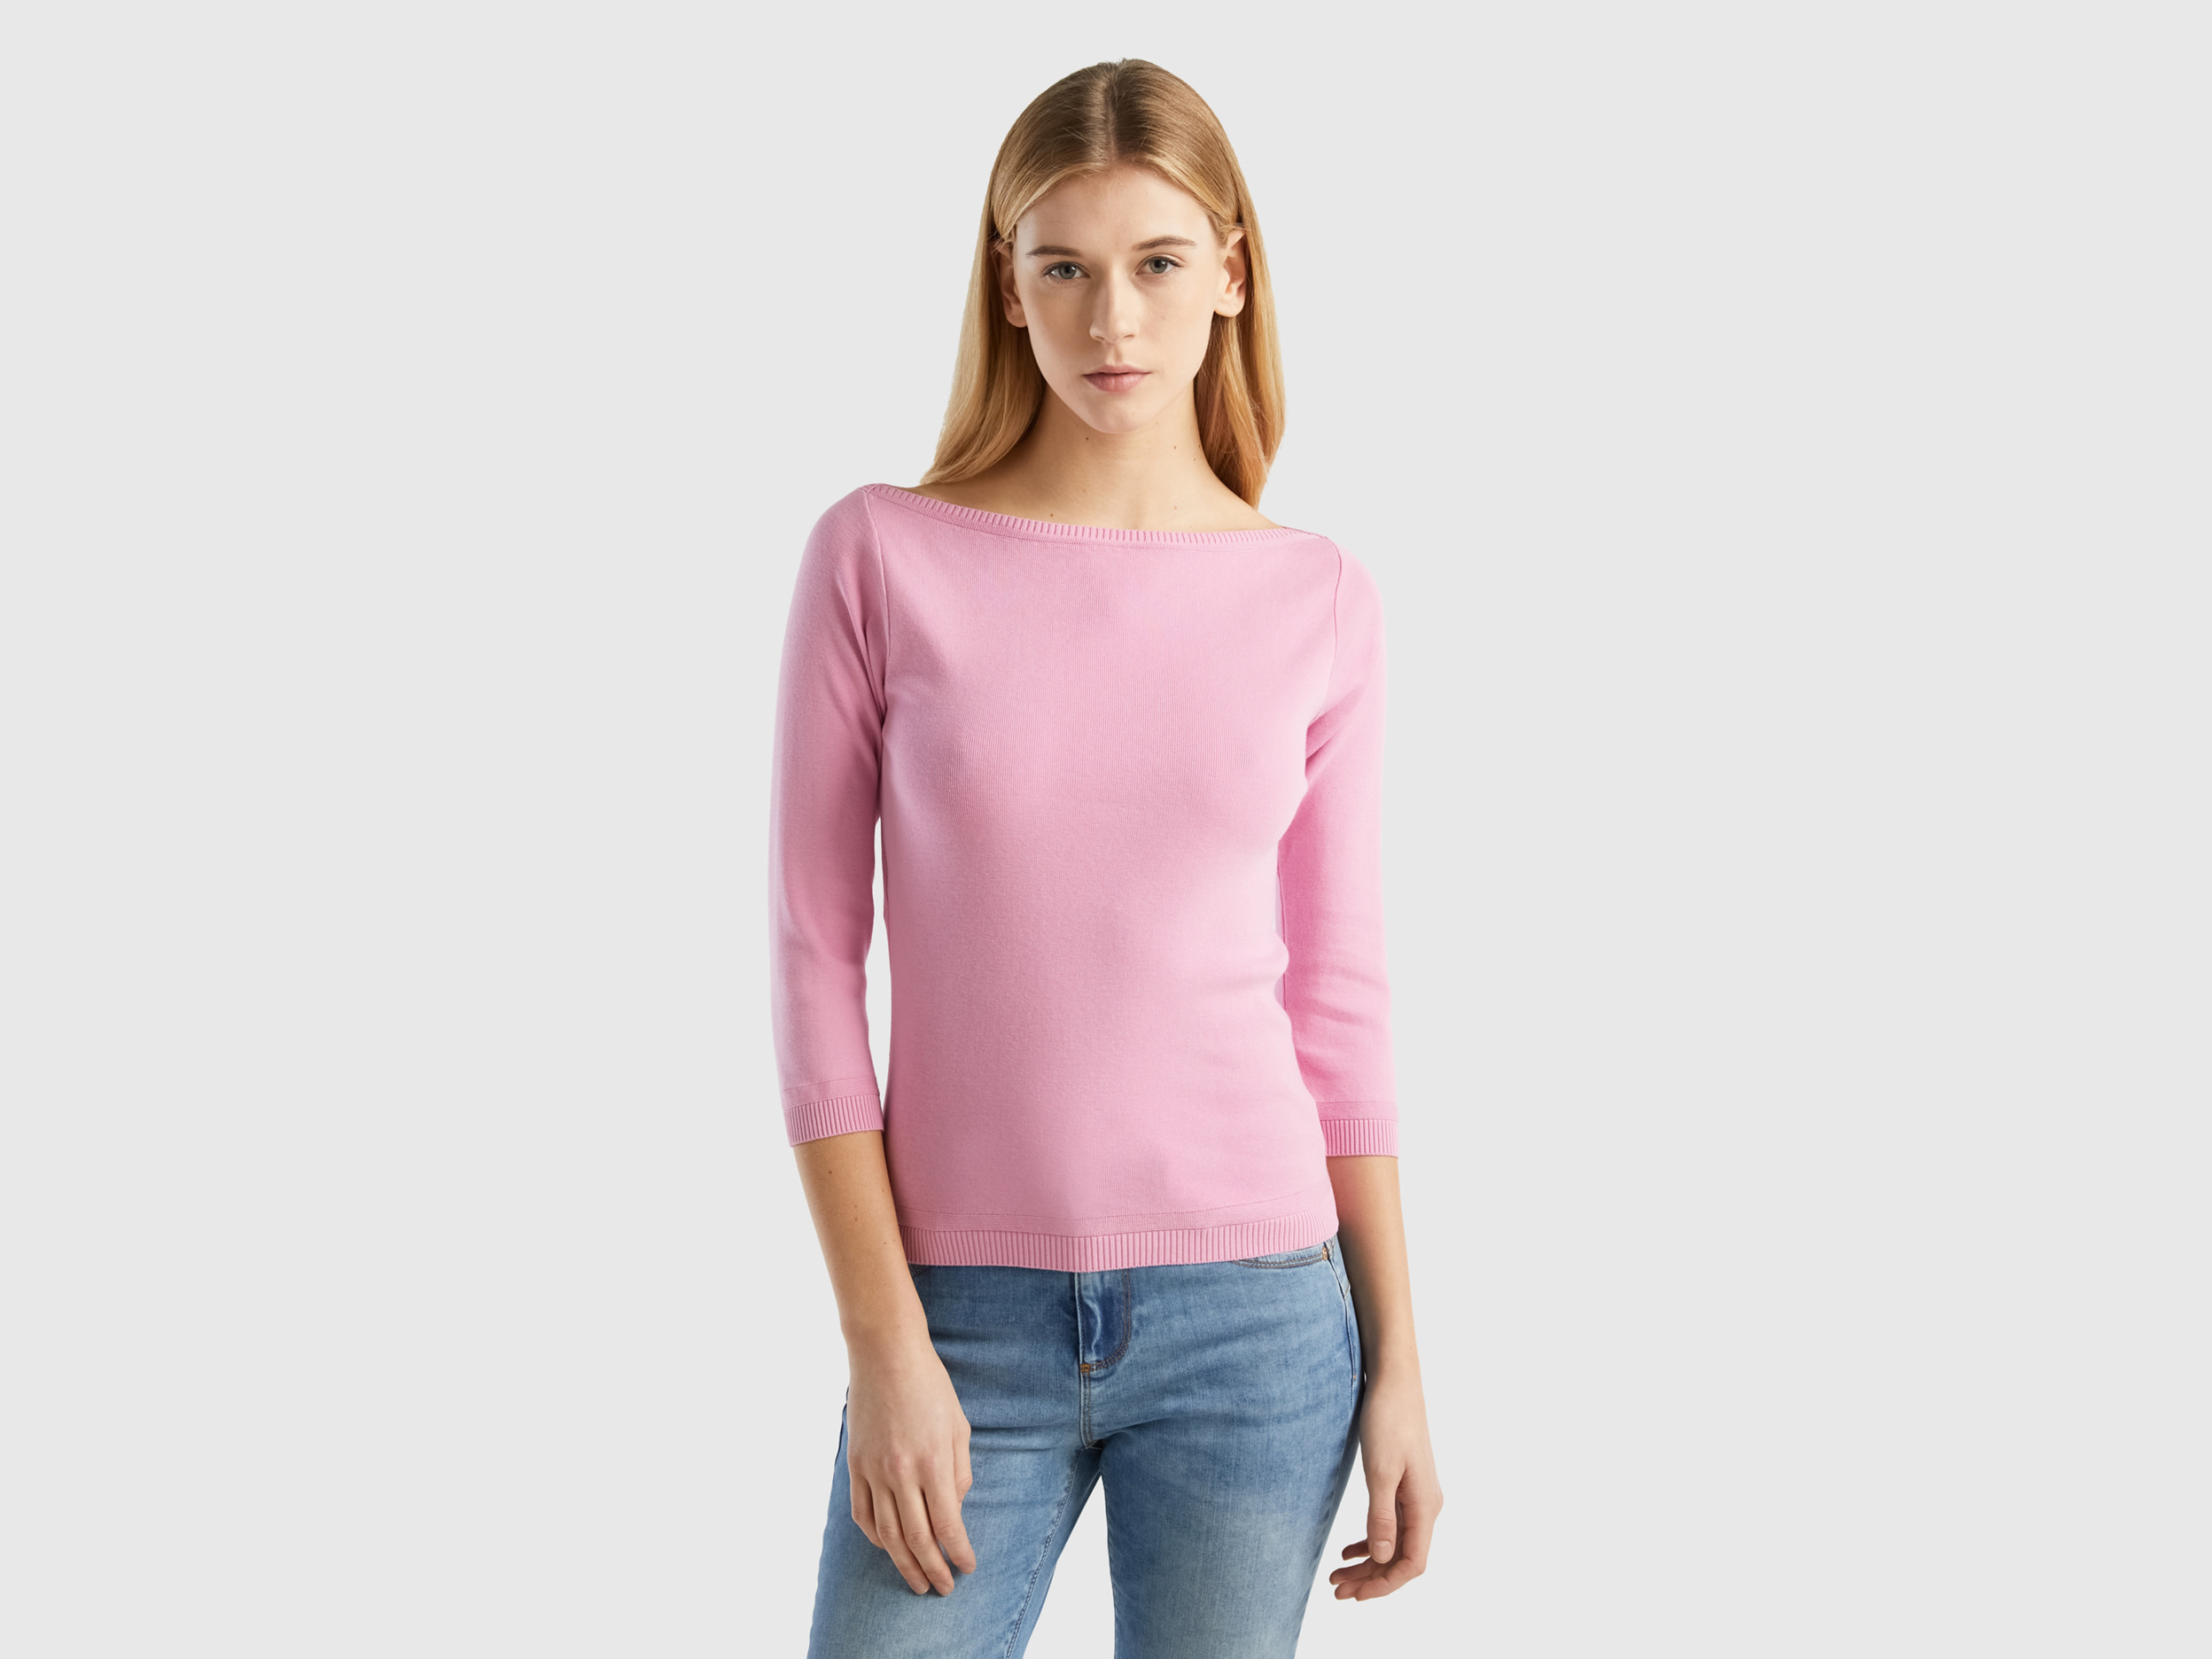 Benetton, 100% Cotton Boat Neck Sweater, size L, Pastel Pink, Women